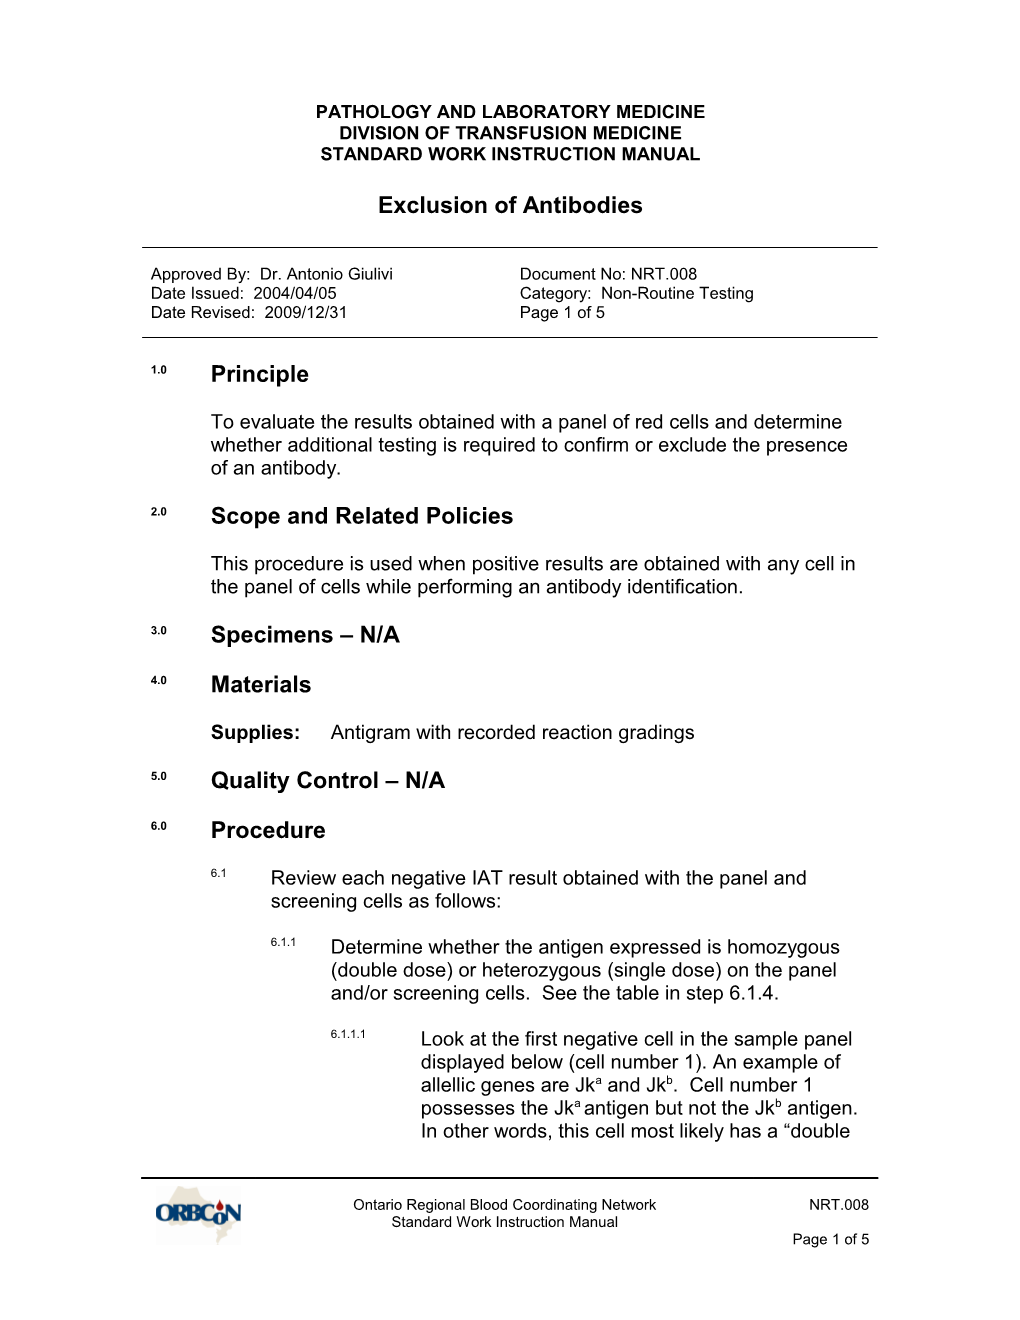 NRT.008 Exclusion of Antibodies